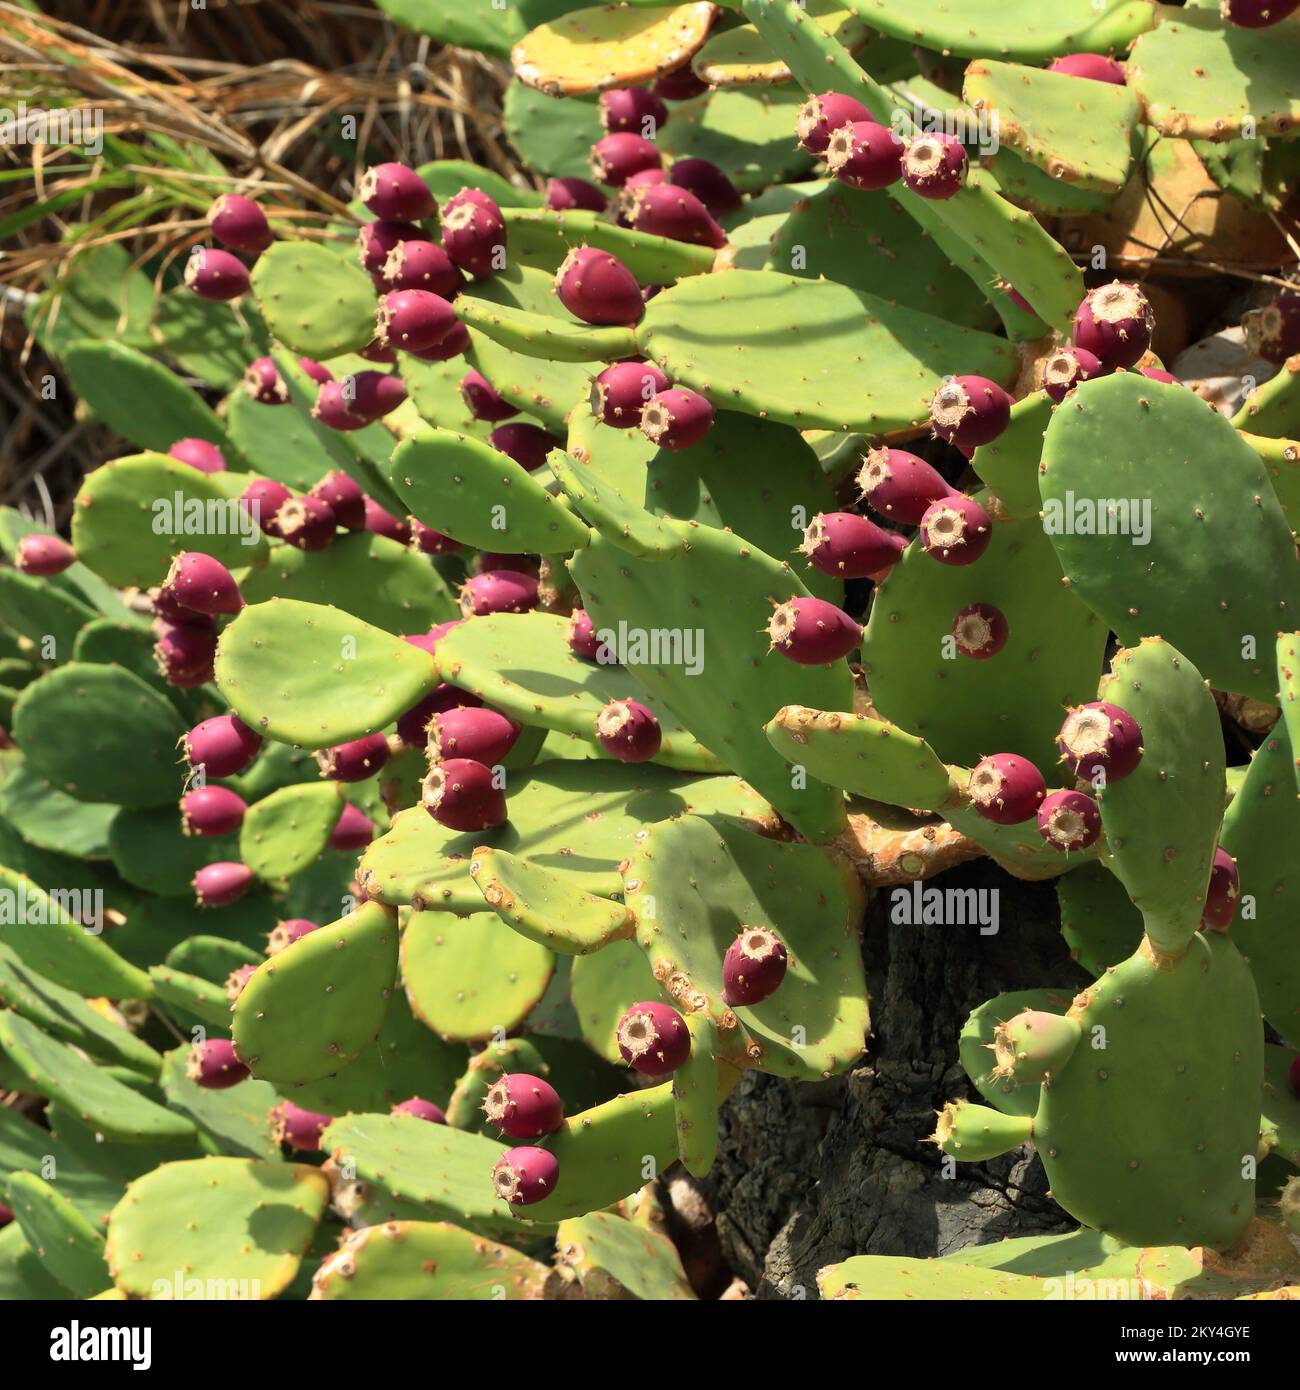 Prickly Pear Cactus with fruits, Opuntia ficus-indica, Indian fig opuntia, Opuntia genus Stock Photo